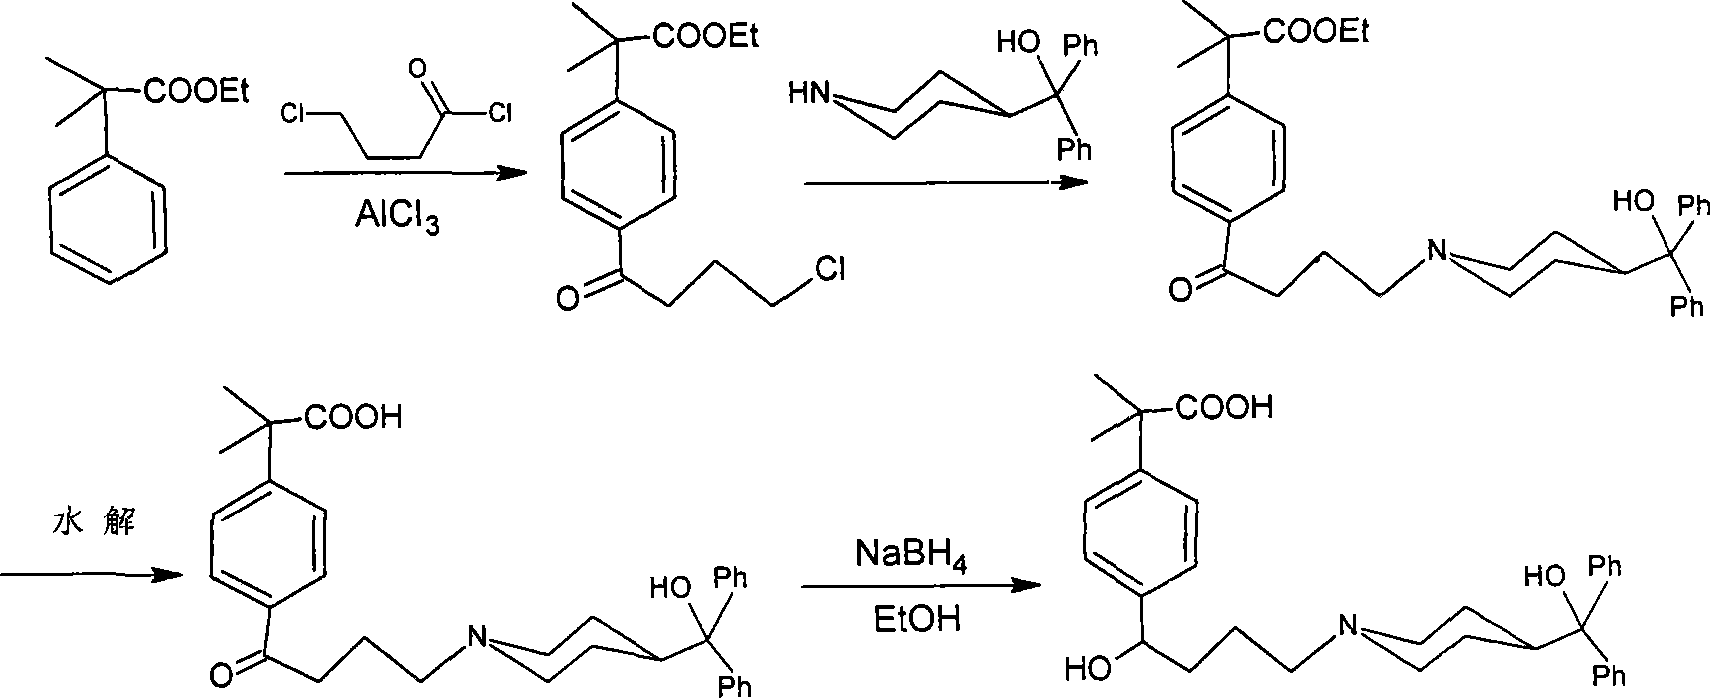 Method for synthesizing intermediate of fexofenadine